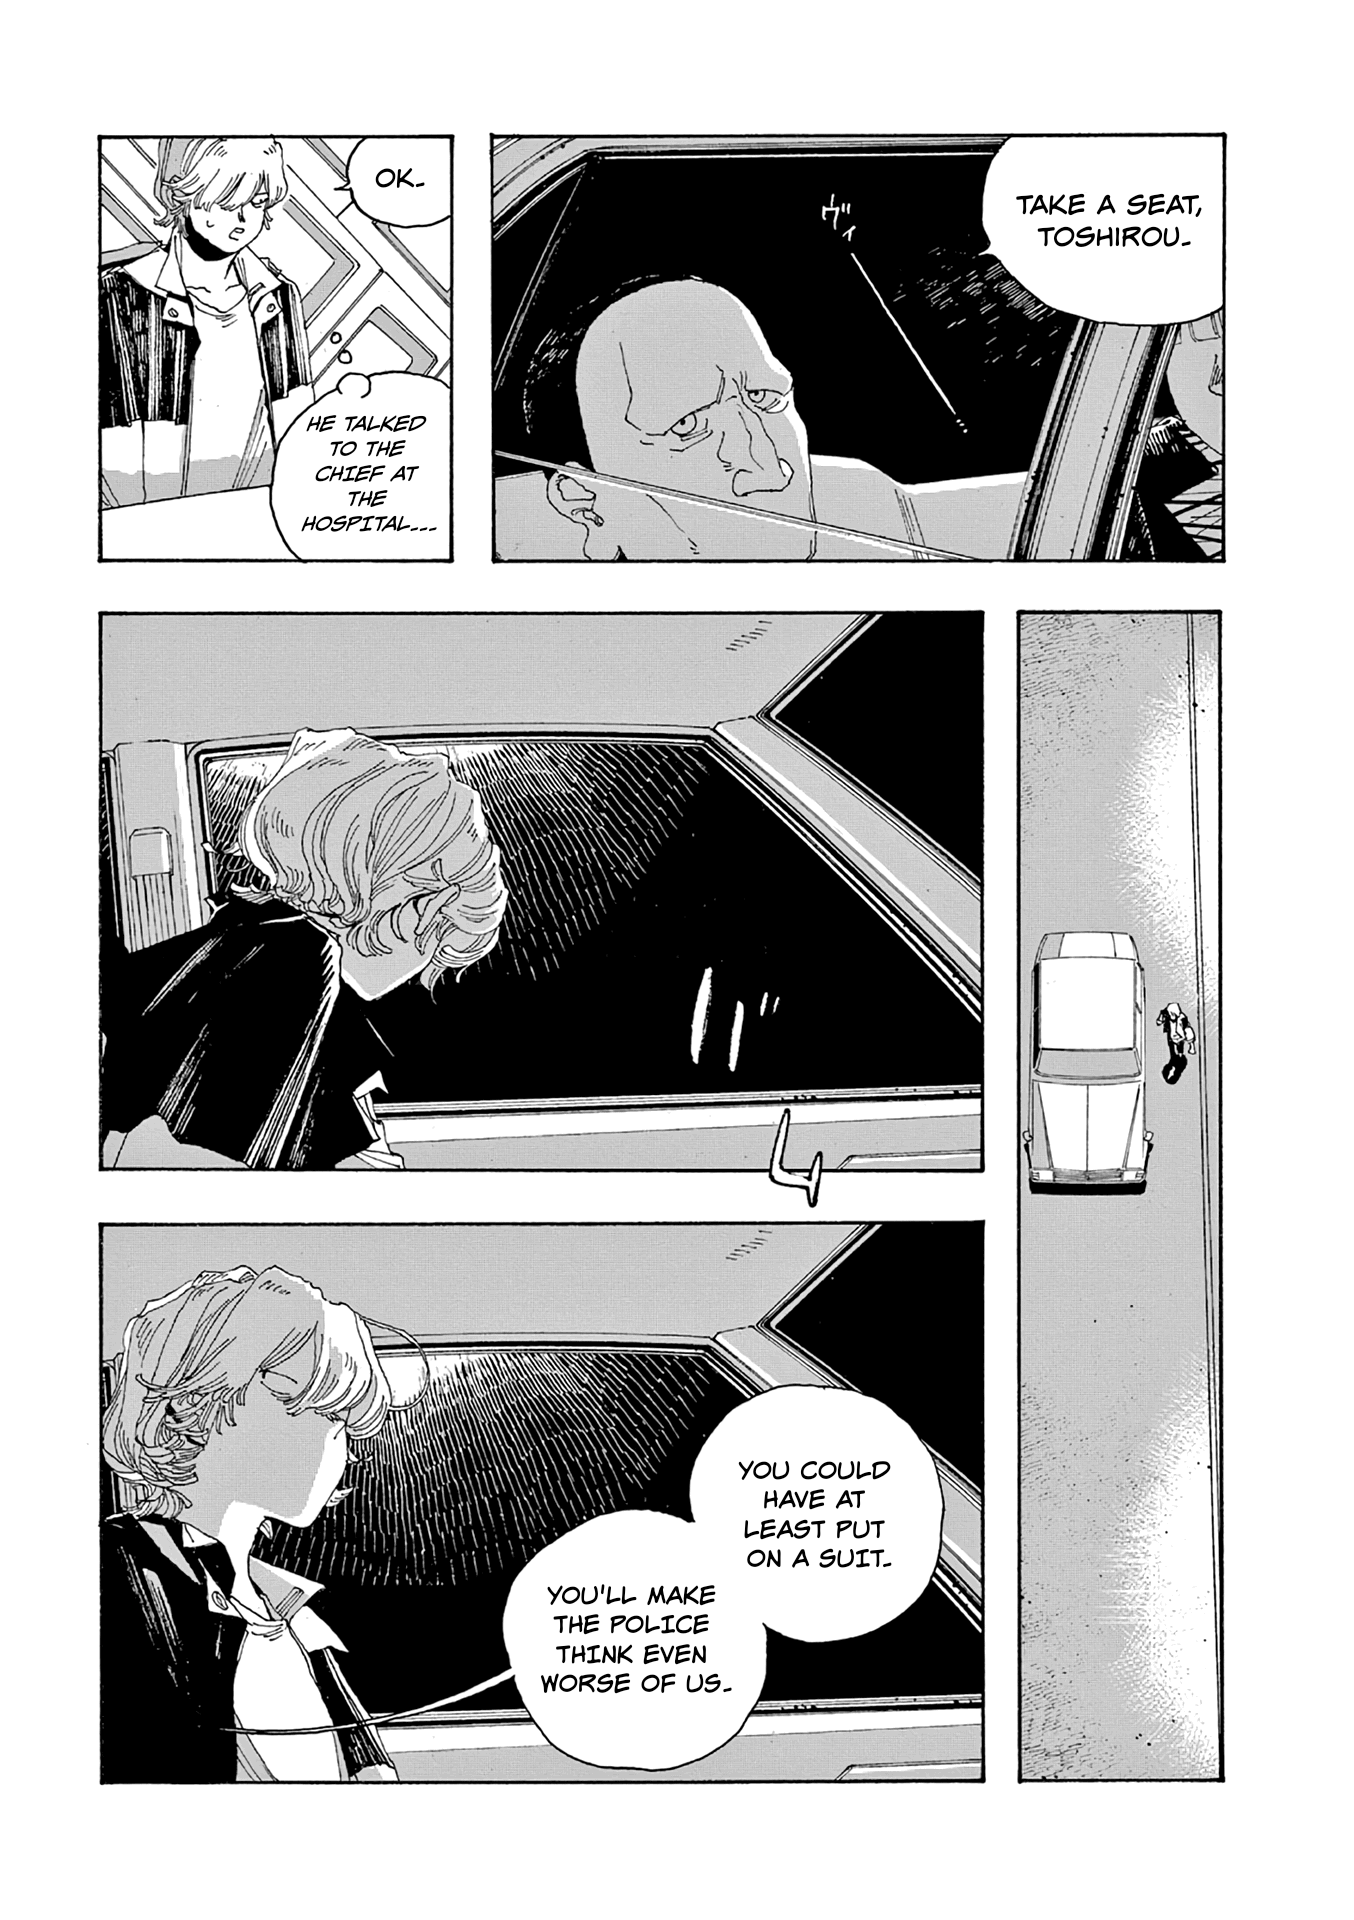 Fool Night - Page 2